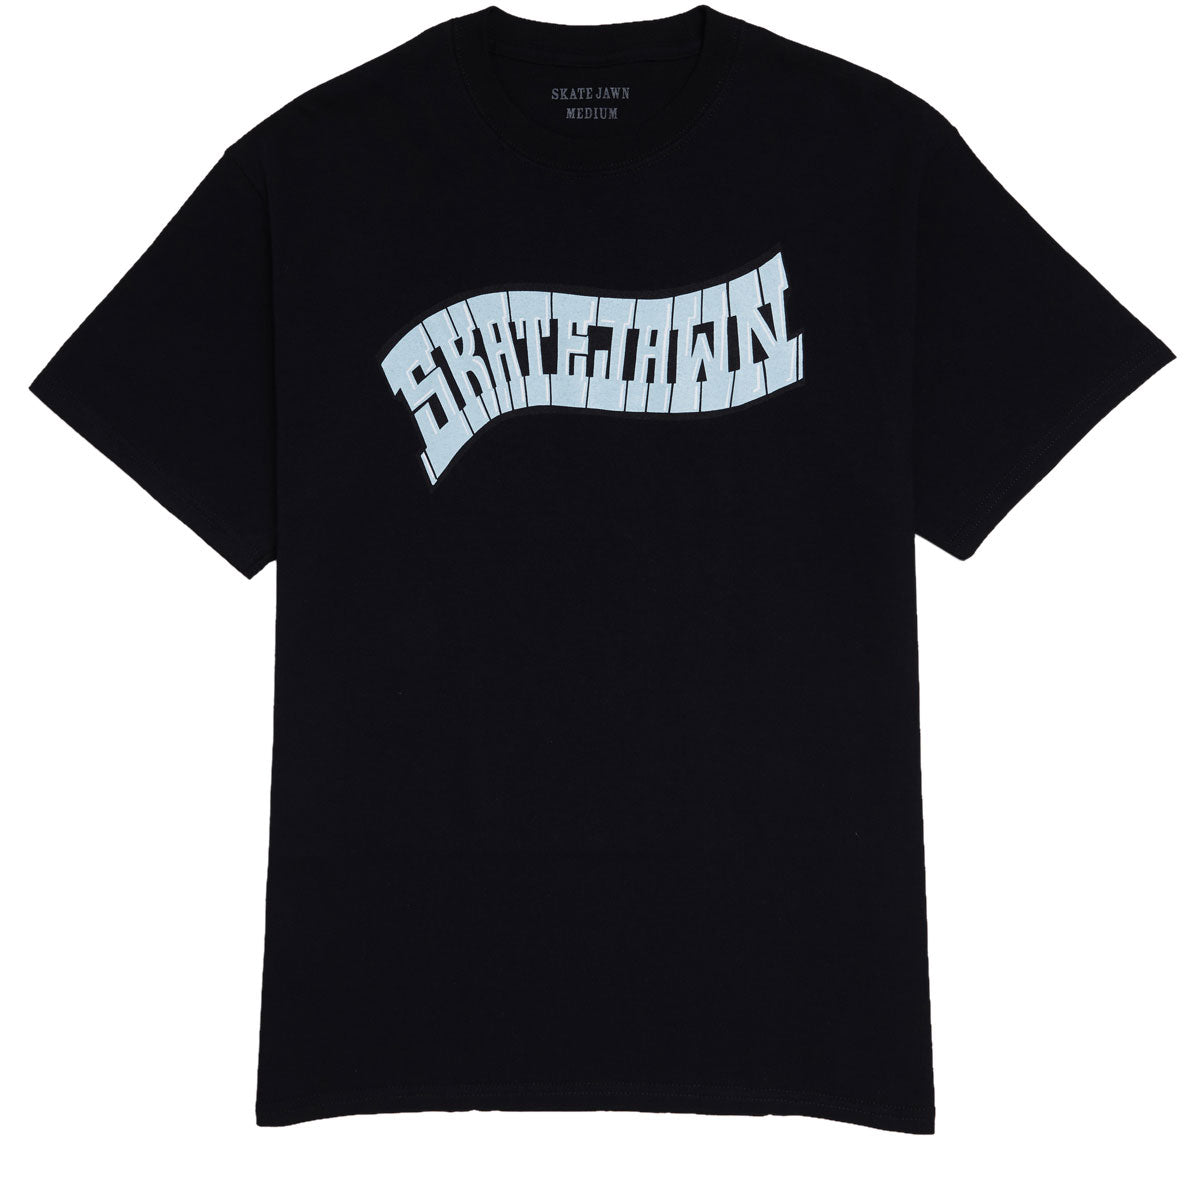 Skate Jawn Funky Piano T-Shirt - Black image 1